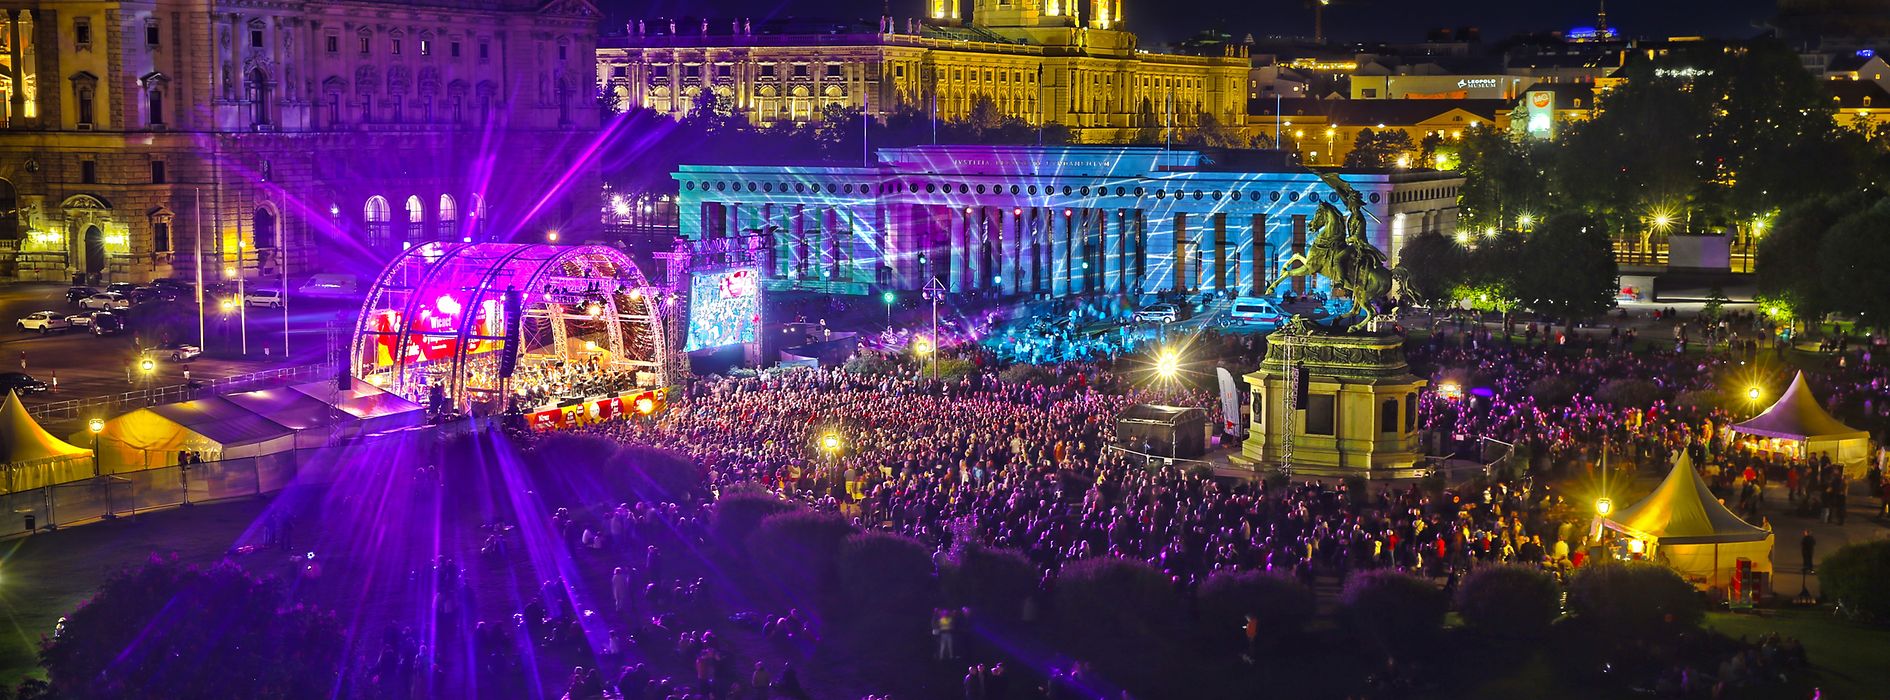 Festival of Joy, Heldenplatz, open-air concert by the Wiener Symphoniker